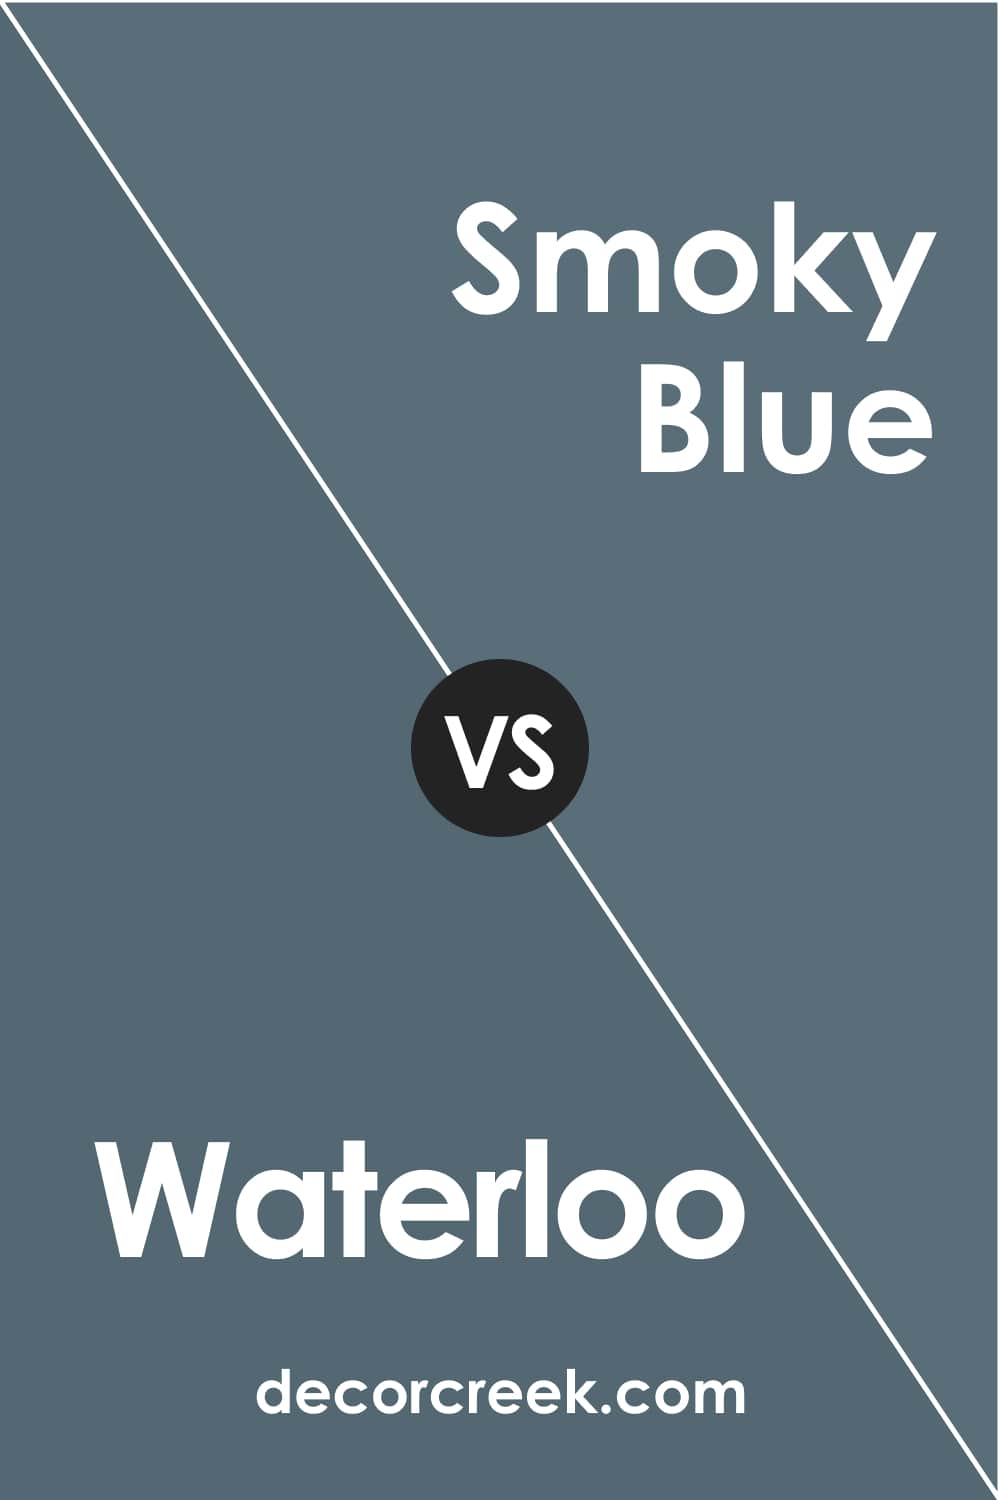 Waterloo vs Smoky Blue